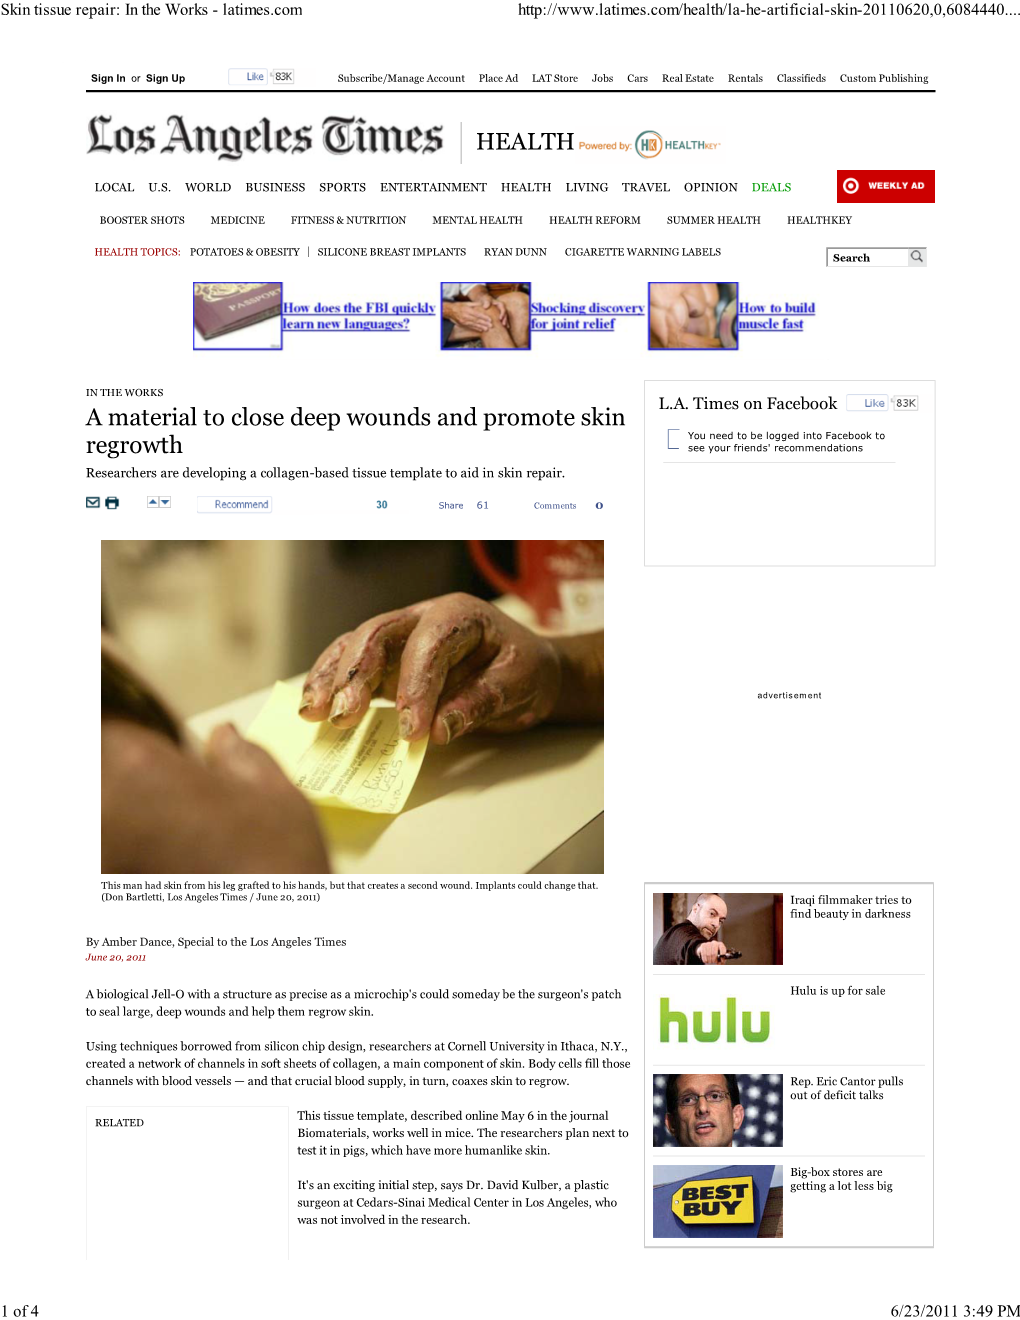 Skin Tissue Repair: in the Works - Latimes.Com